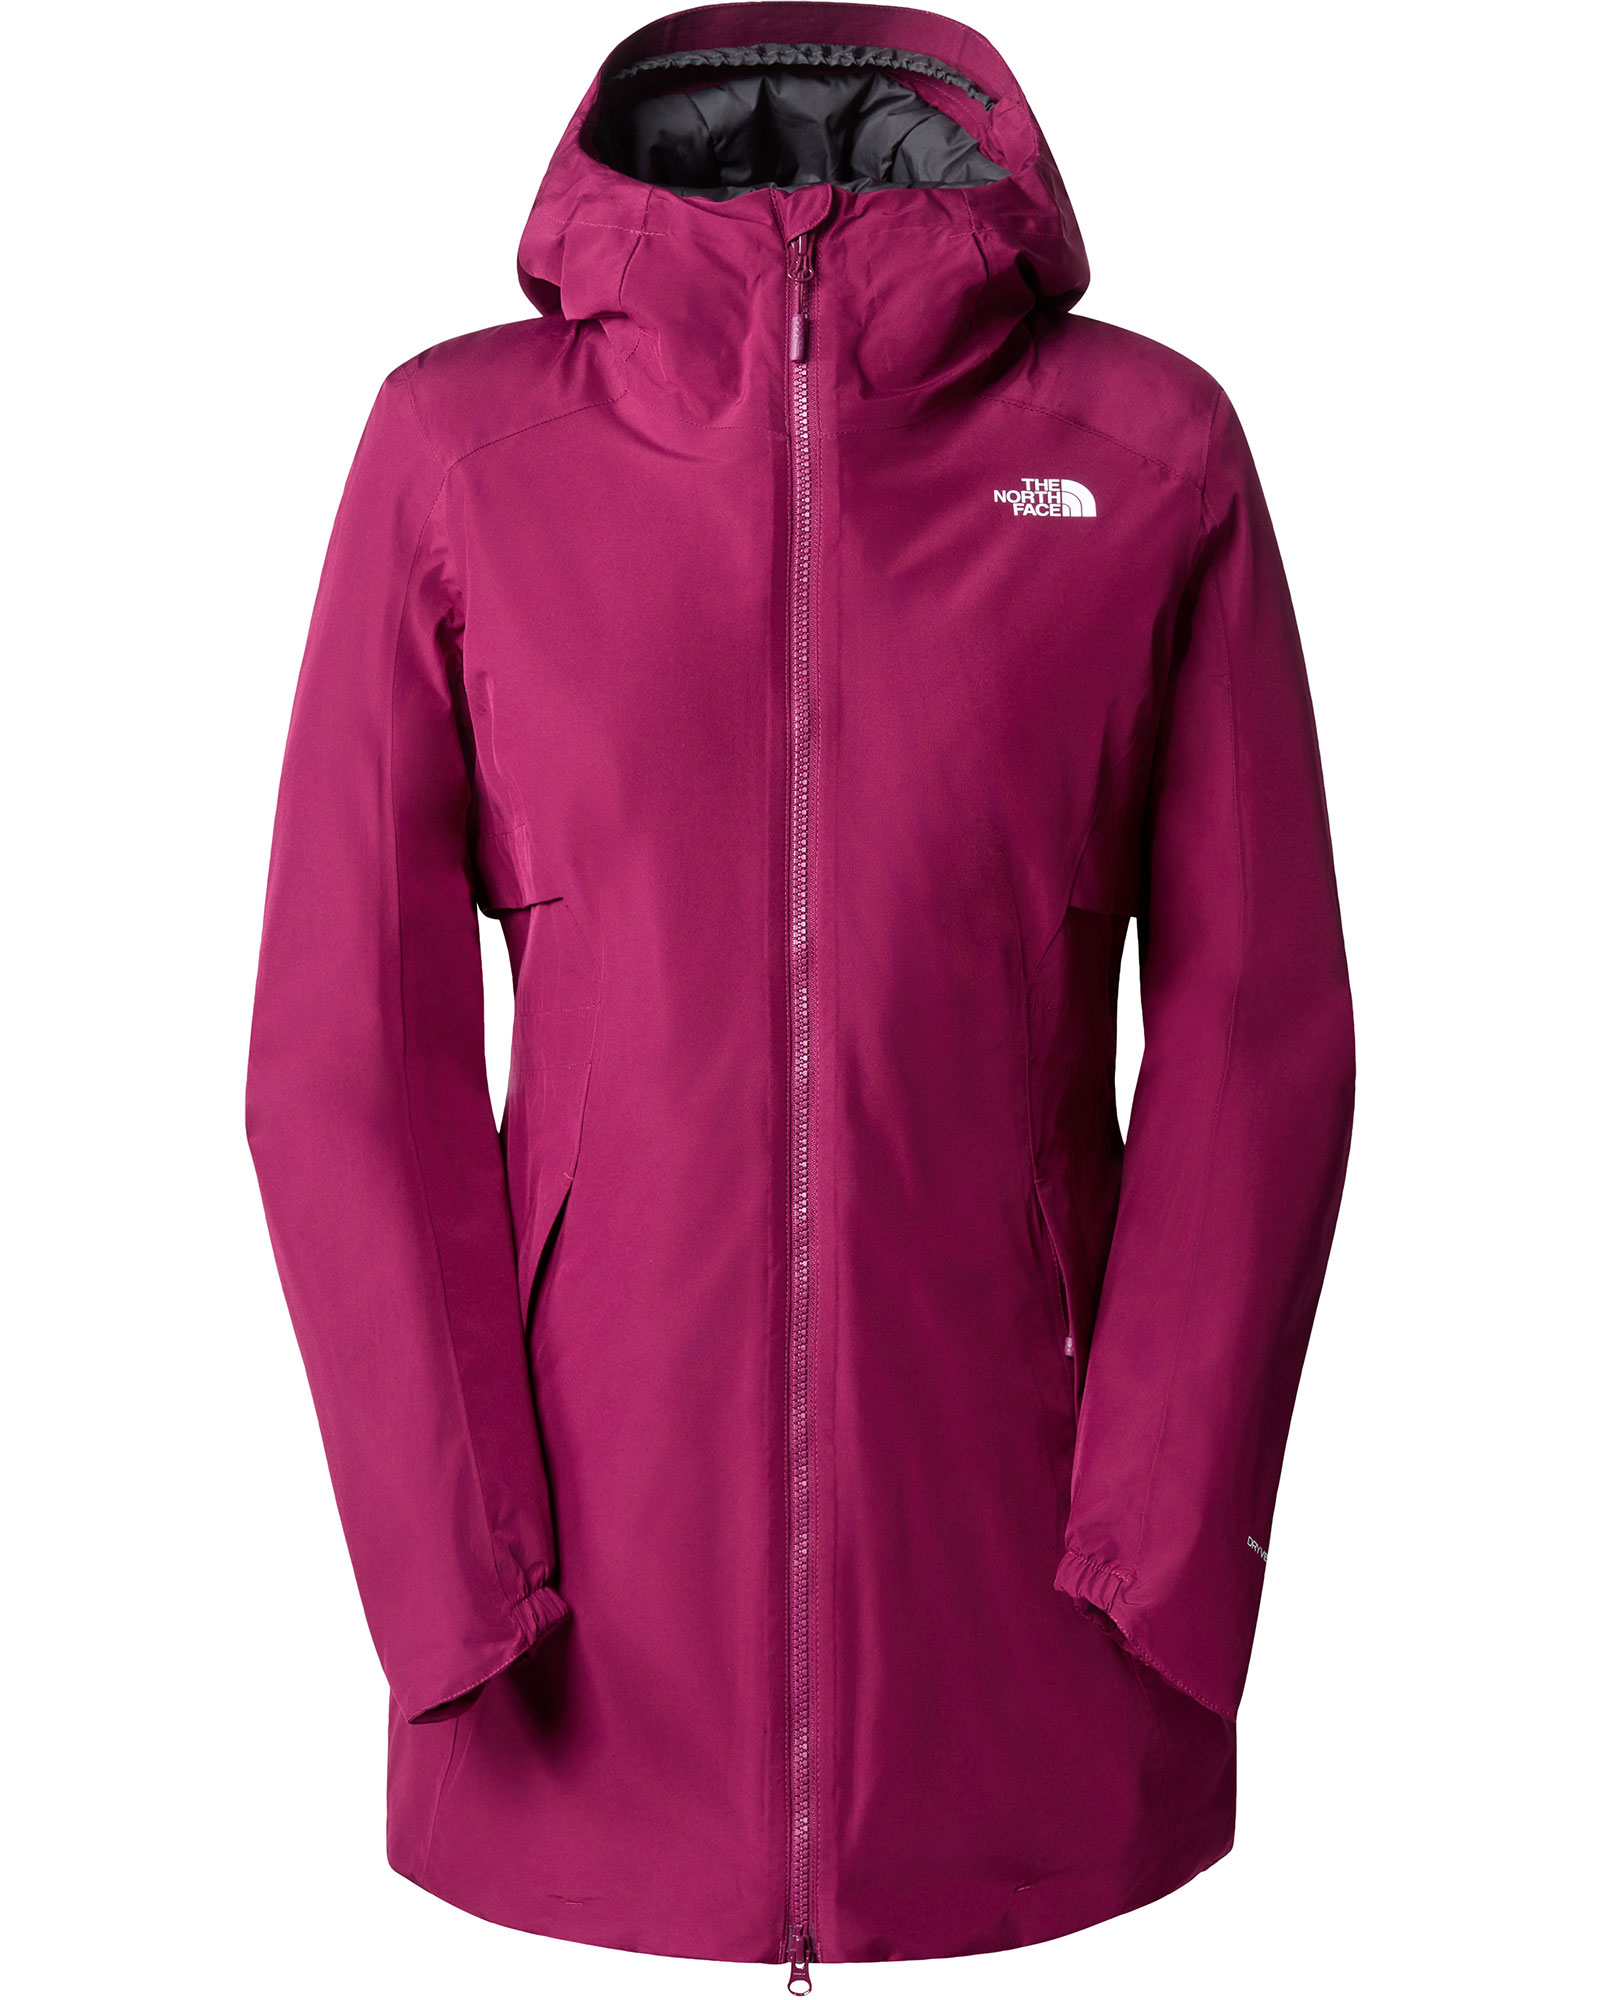 The North Face Hikesteller Women’s Insulated Parka Jacket - Boysenberry-Asphalt Grey XS